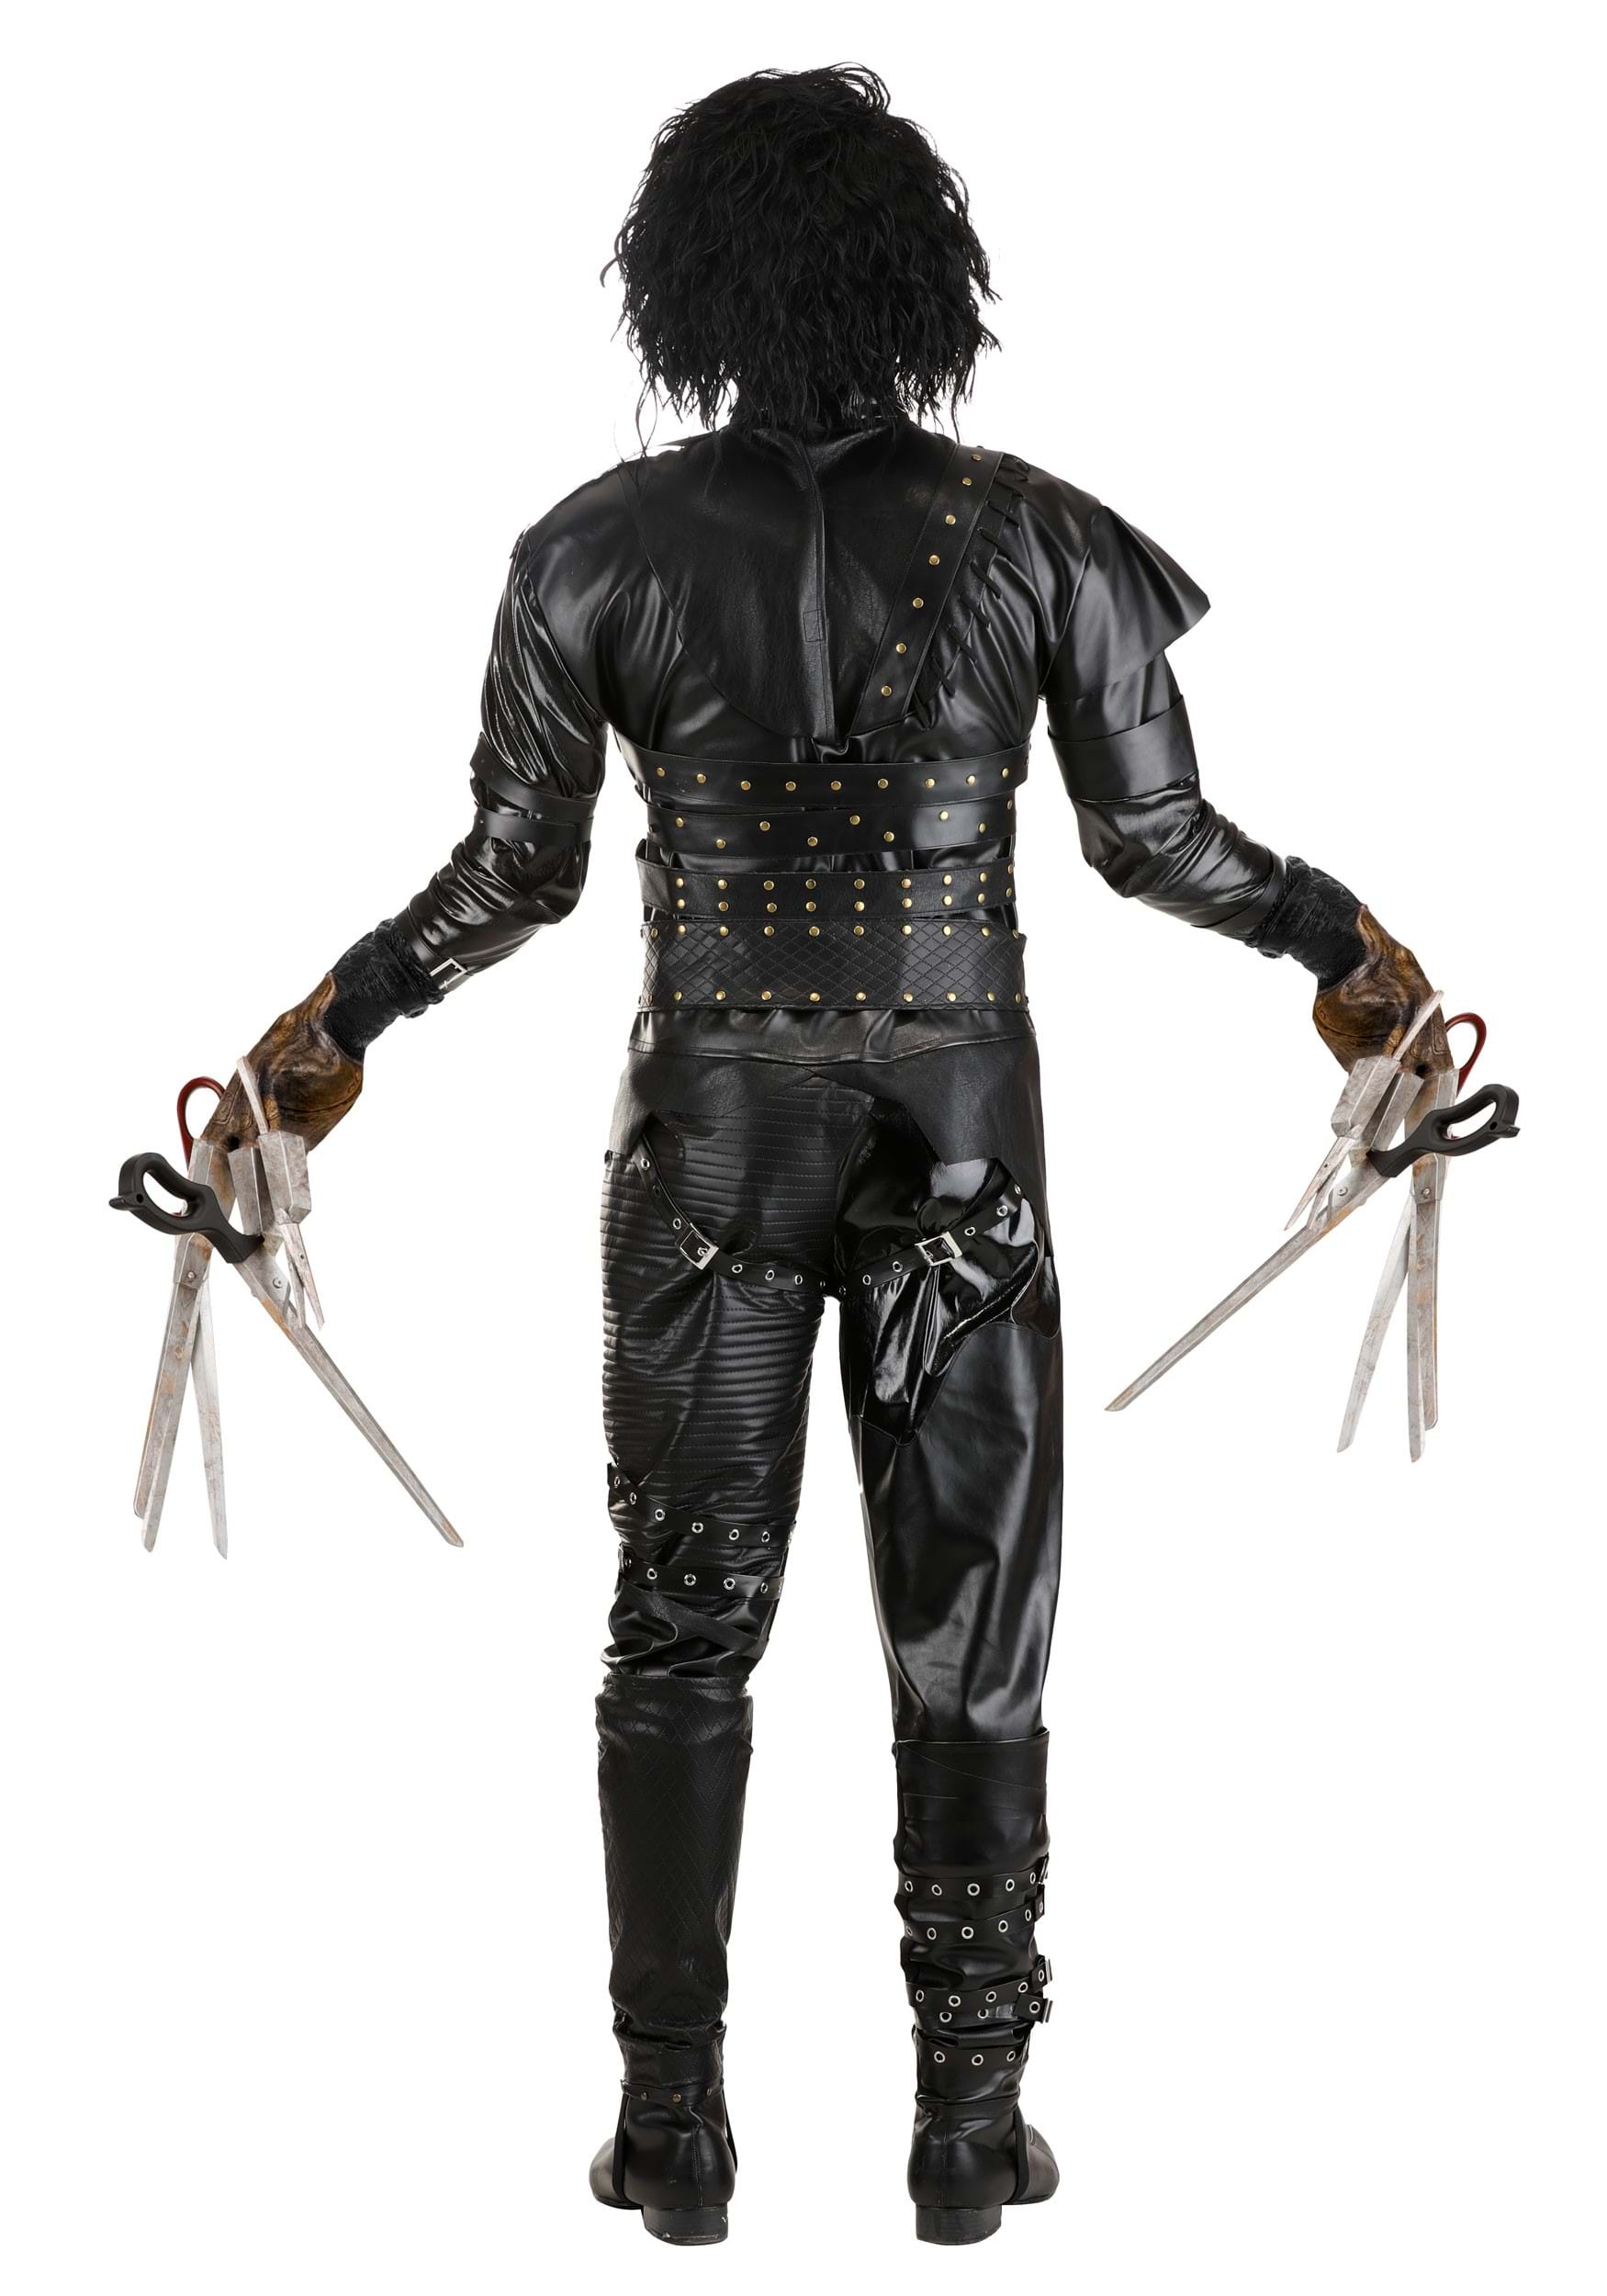 Men's Authentic Edward Scissorhands Costume - image 2 of 11